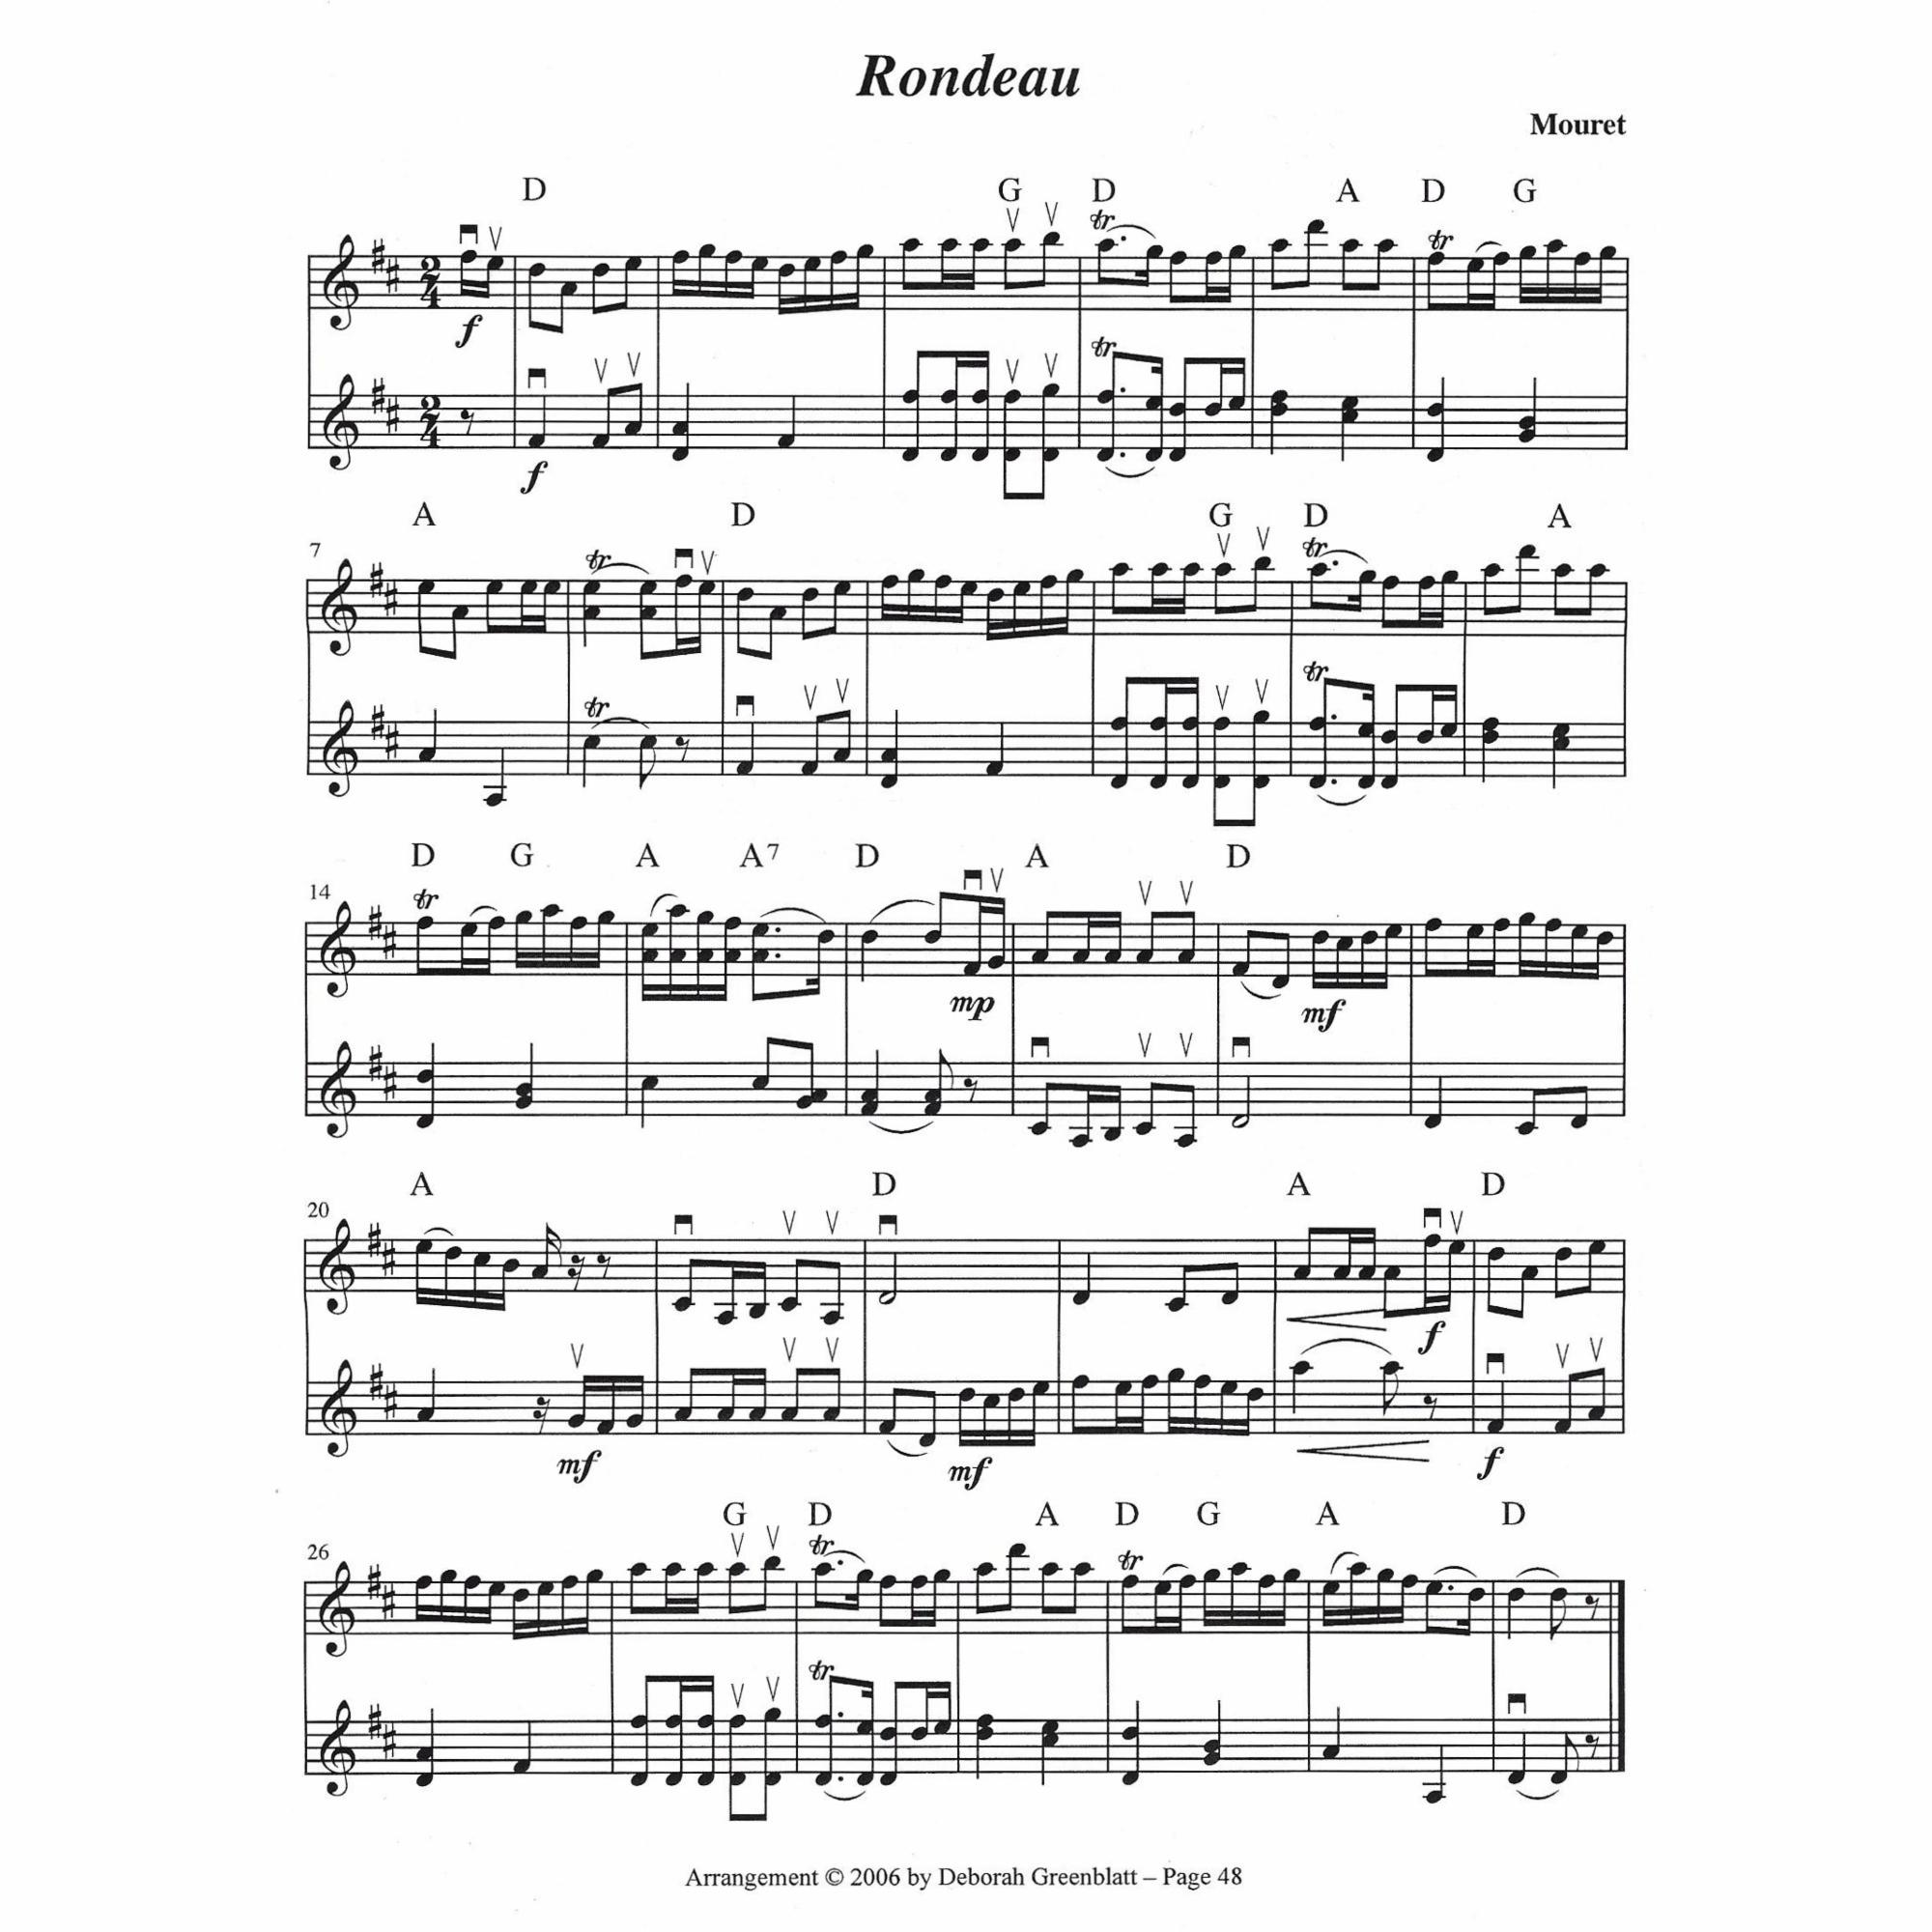 Sample: Two Violins (Pg. 48)